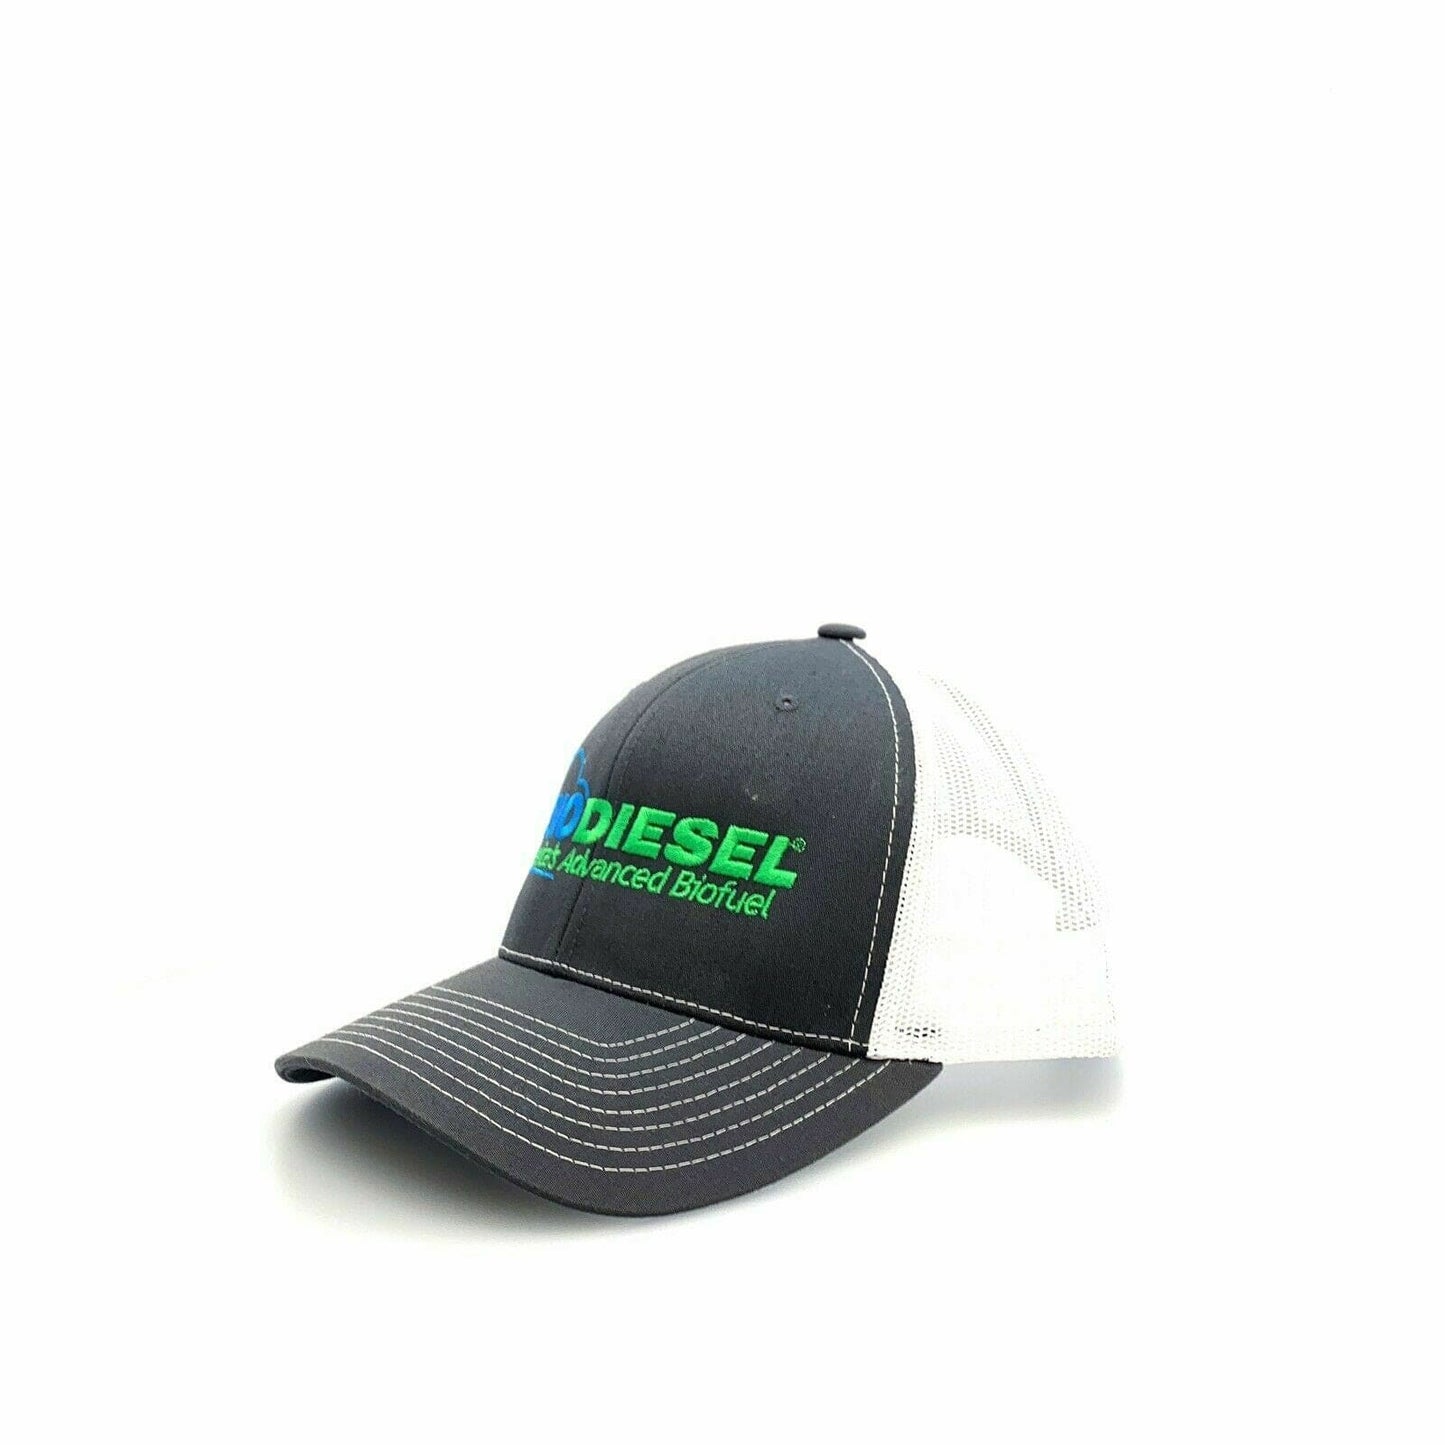 BIODEISEL BIOFUEL Mens Mesh SnapBack Trucker Hat, Gray / White - OSFA